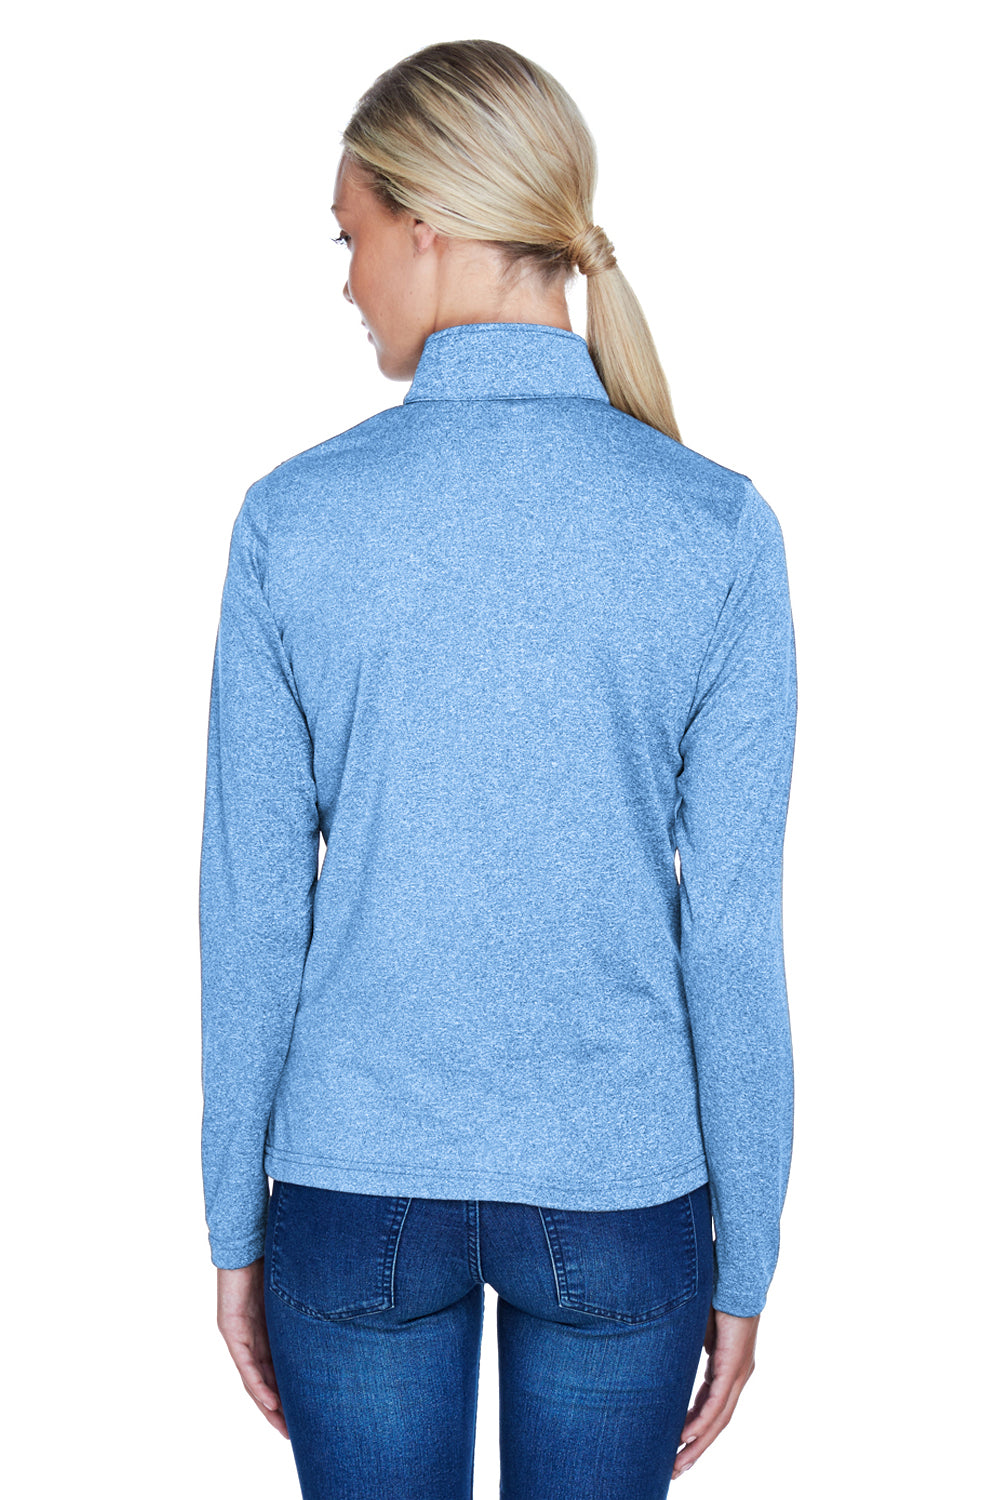 UltraClub 8618W Womens Heather Cool & Dry Performance Moisture Wicking 1/4 Zip Sweatshirt Columbia Blue Back